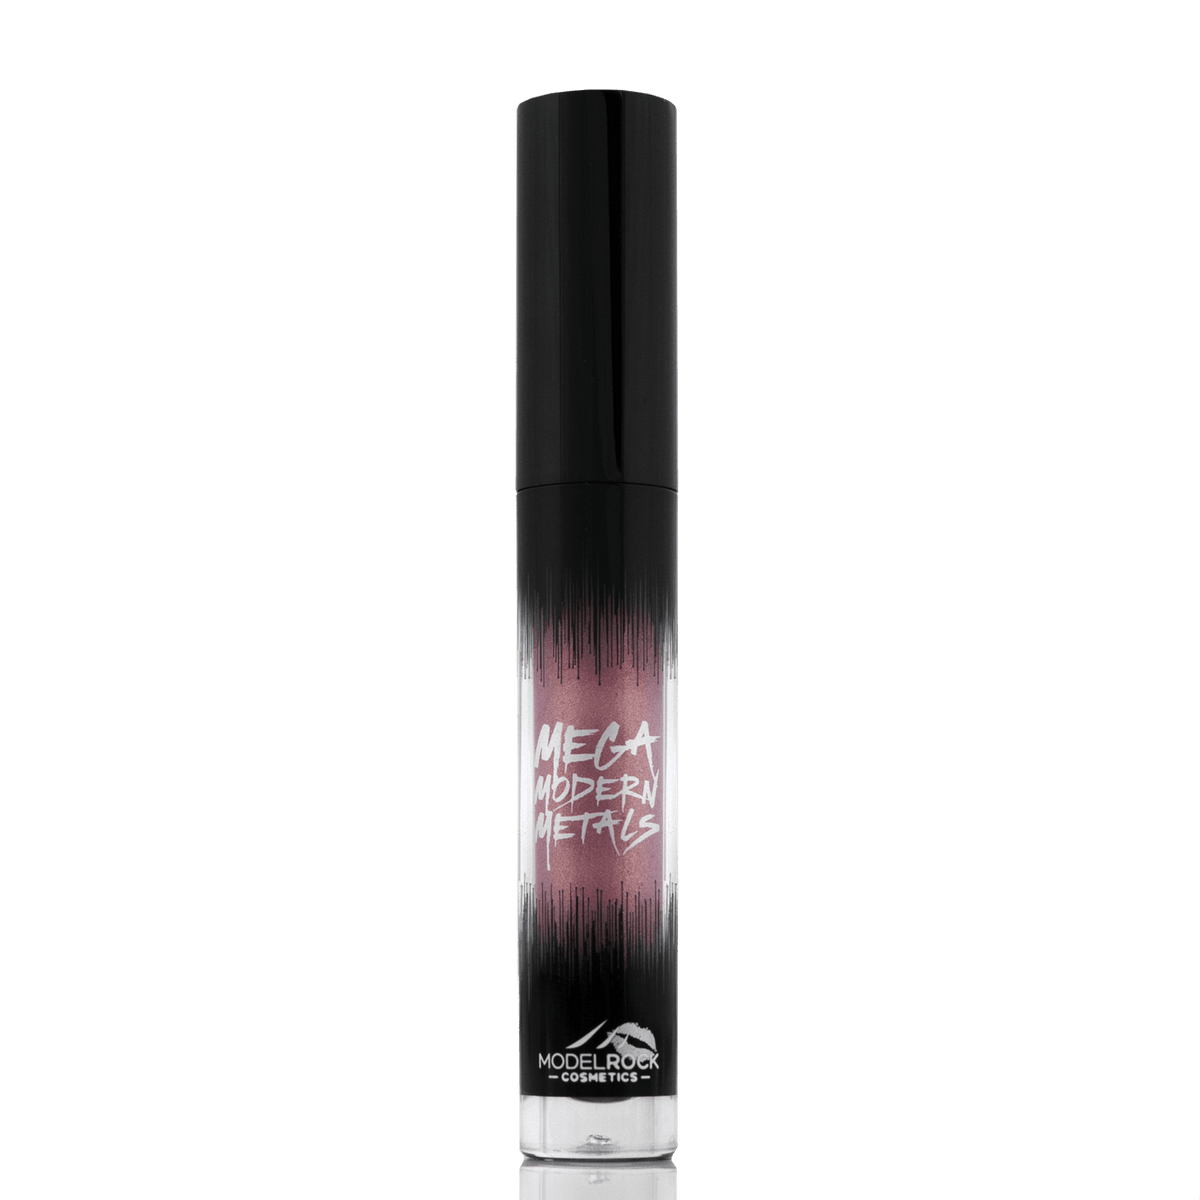 ModelRock Coquette Mega Modern Metals Lipstick